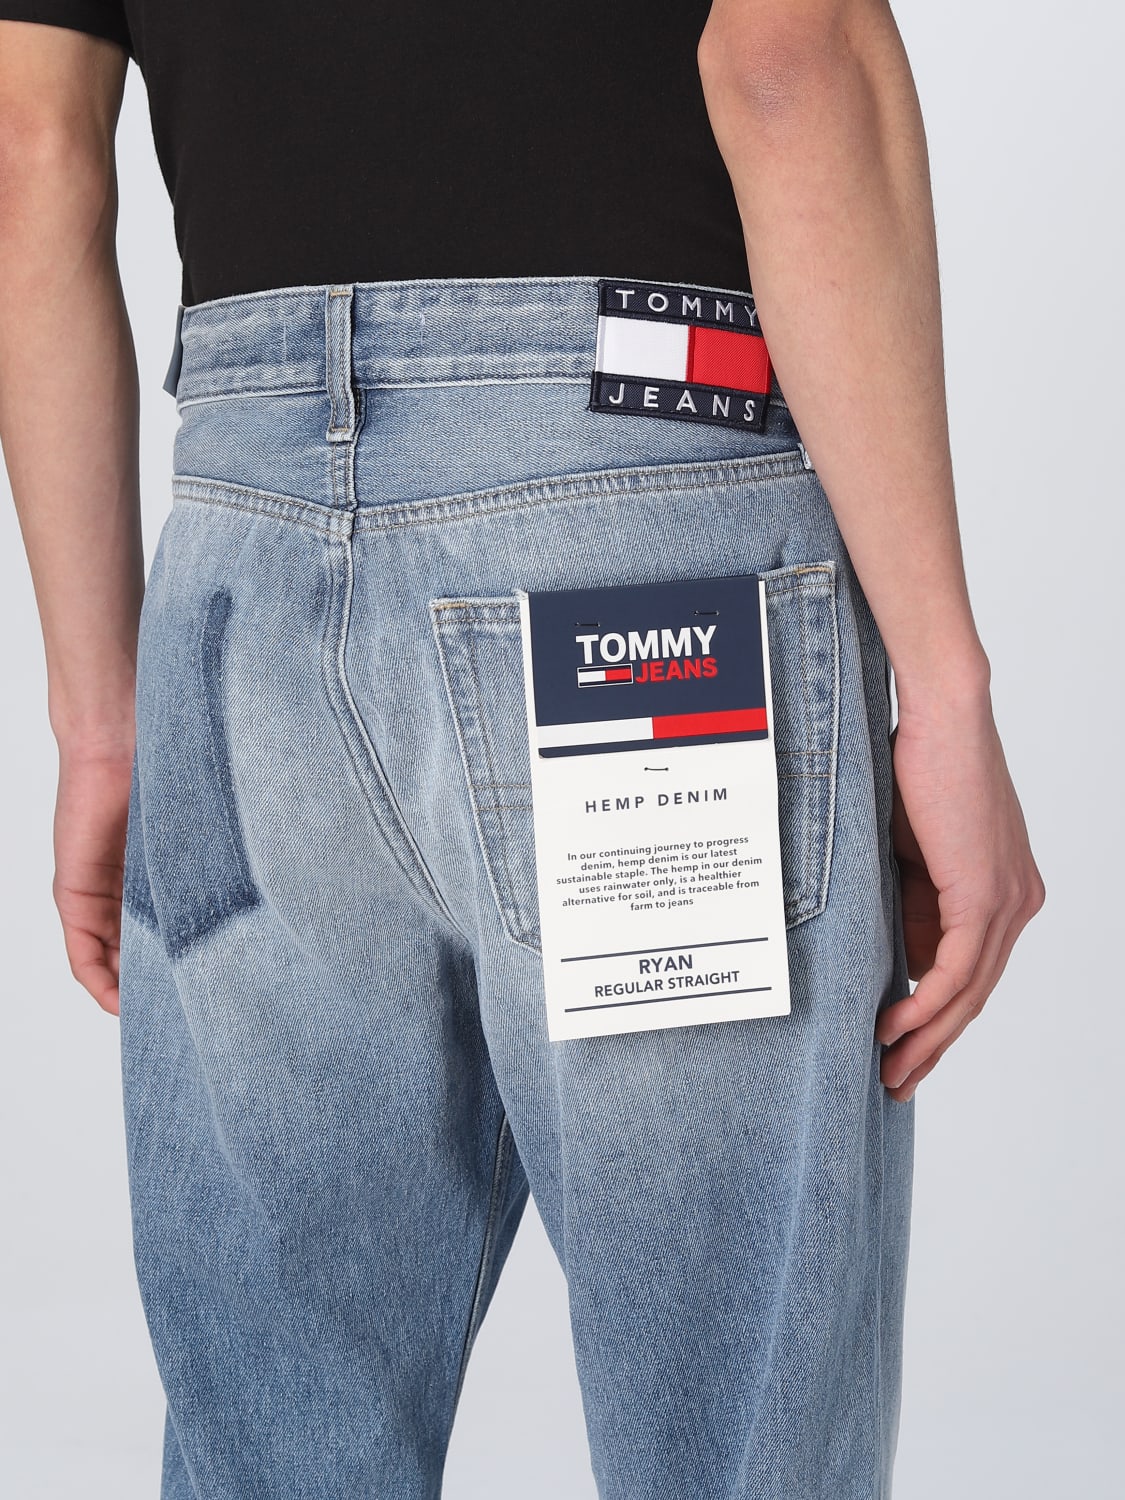 Tommy Jeans Tommy Hilfiger Carpenter Jeans Size 8 Youth Blue Jeans 